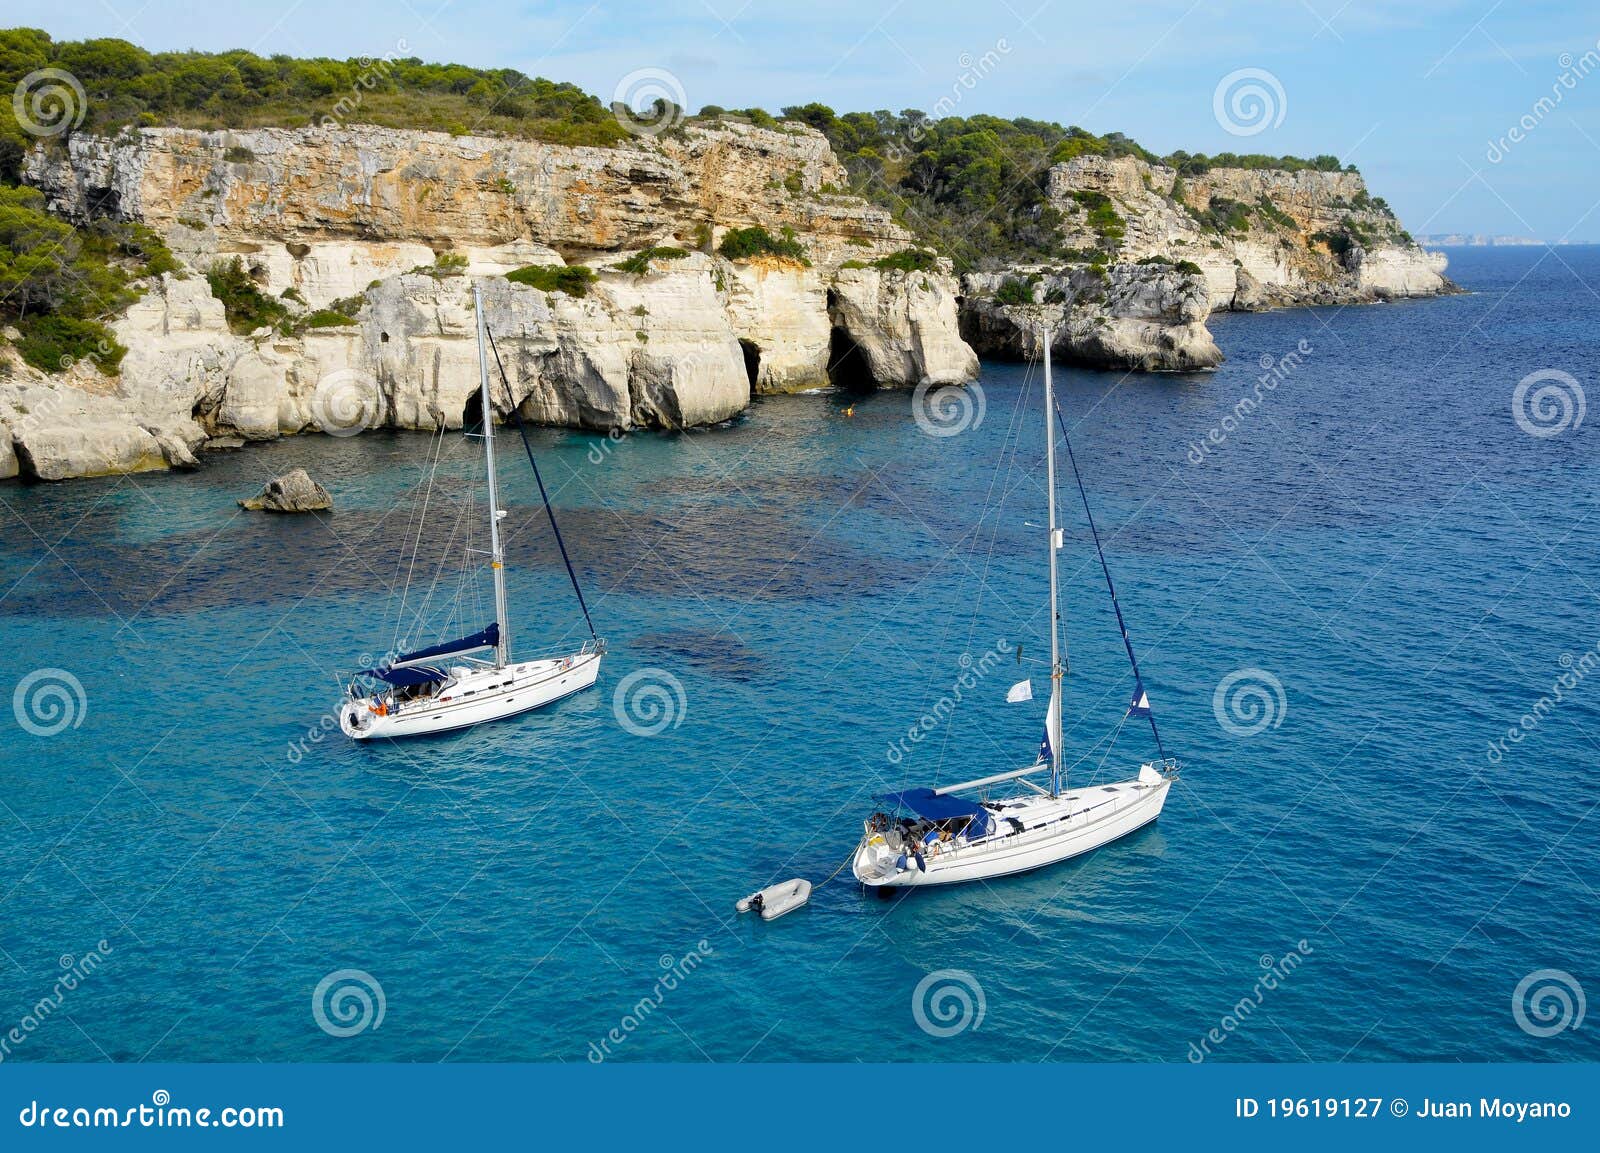 menorca, balearic islands, spain